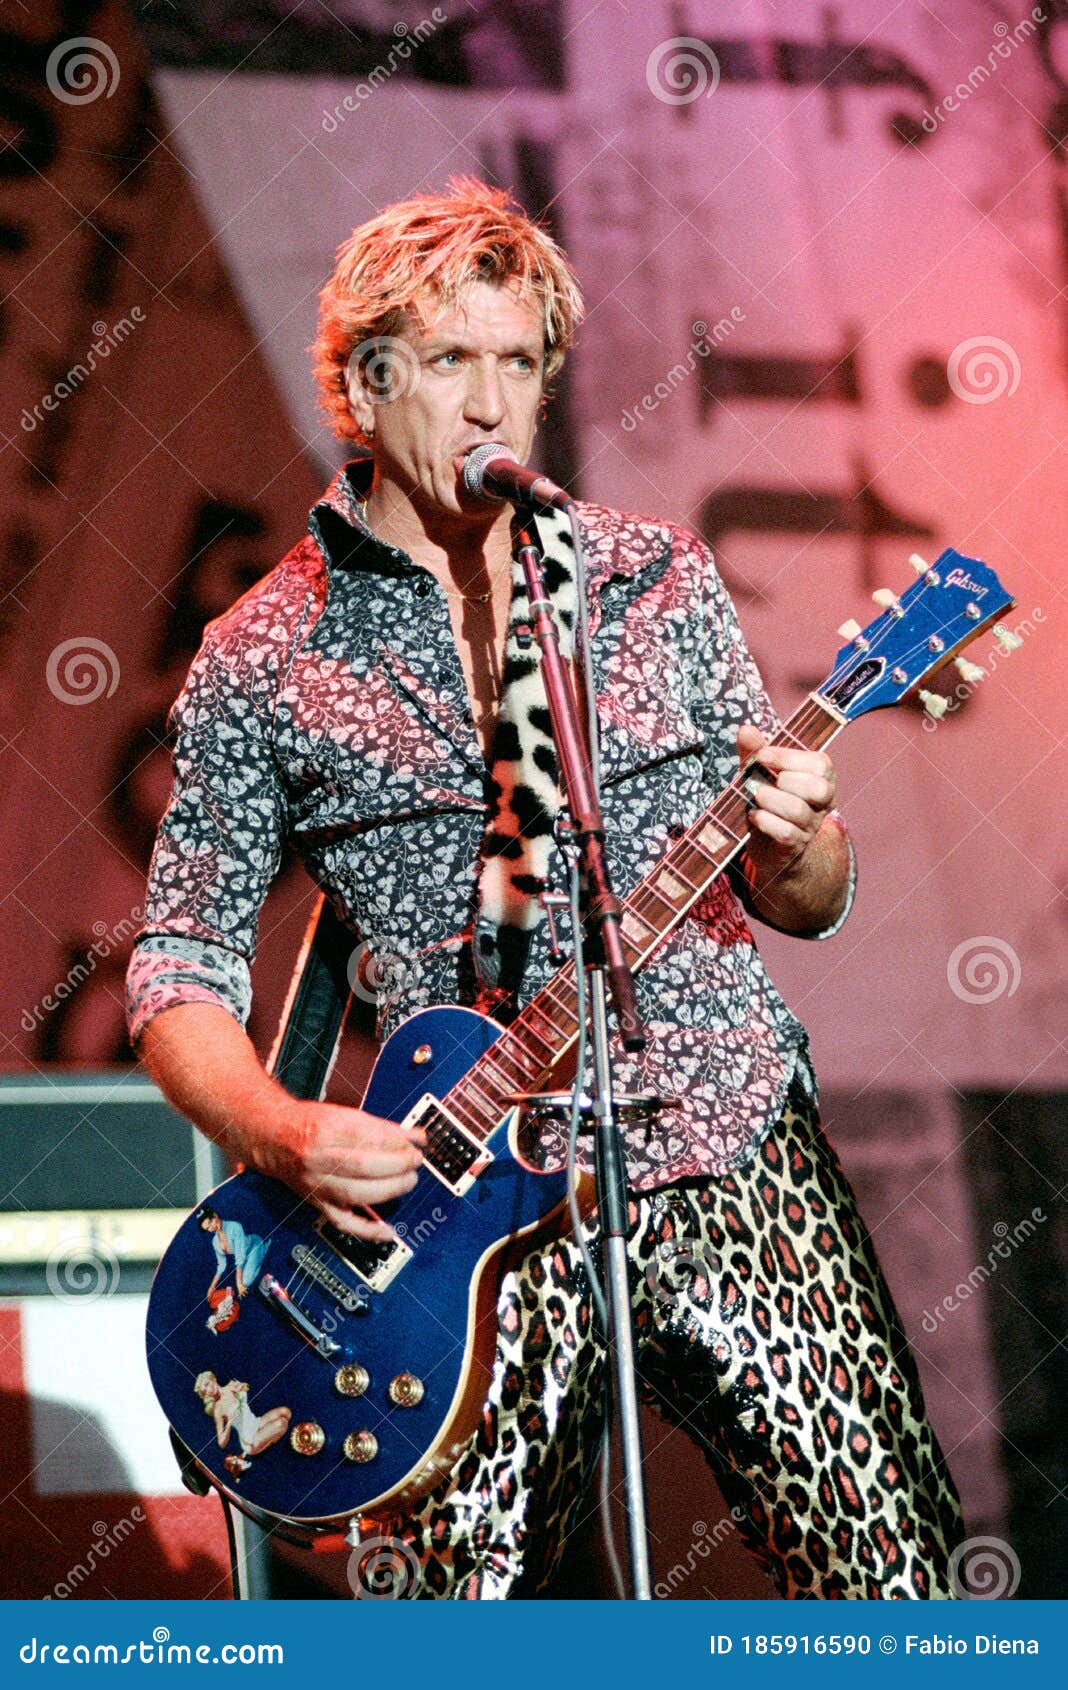 Sex Pistols Steve Jones During The Concert Editorial Image Image